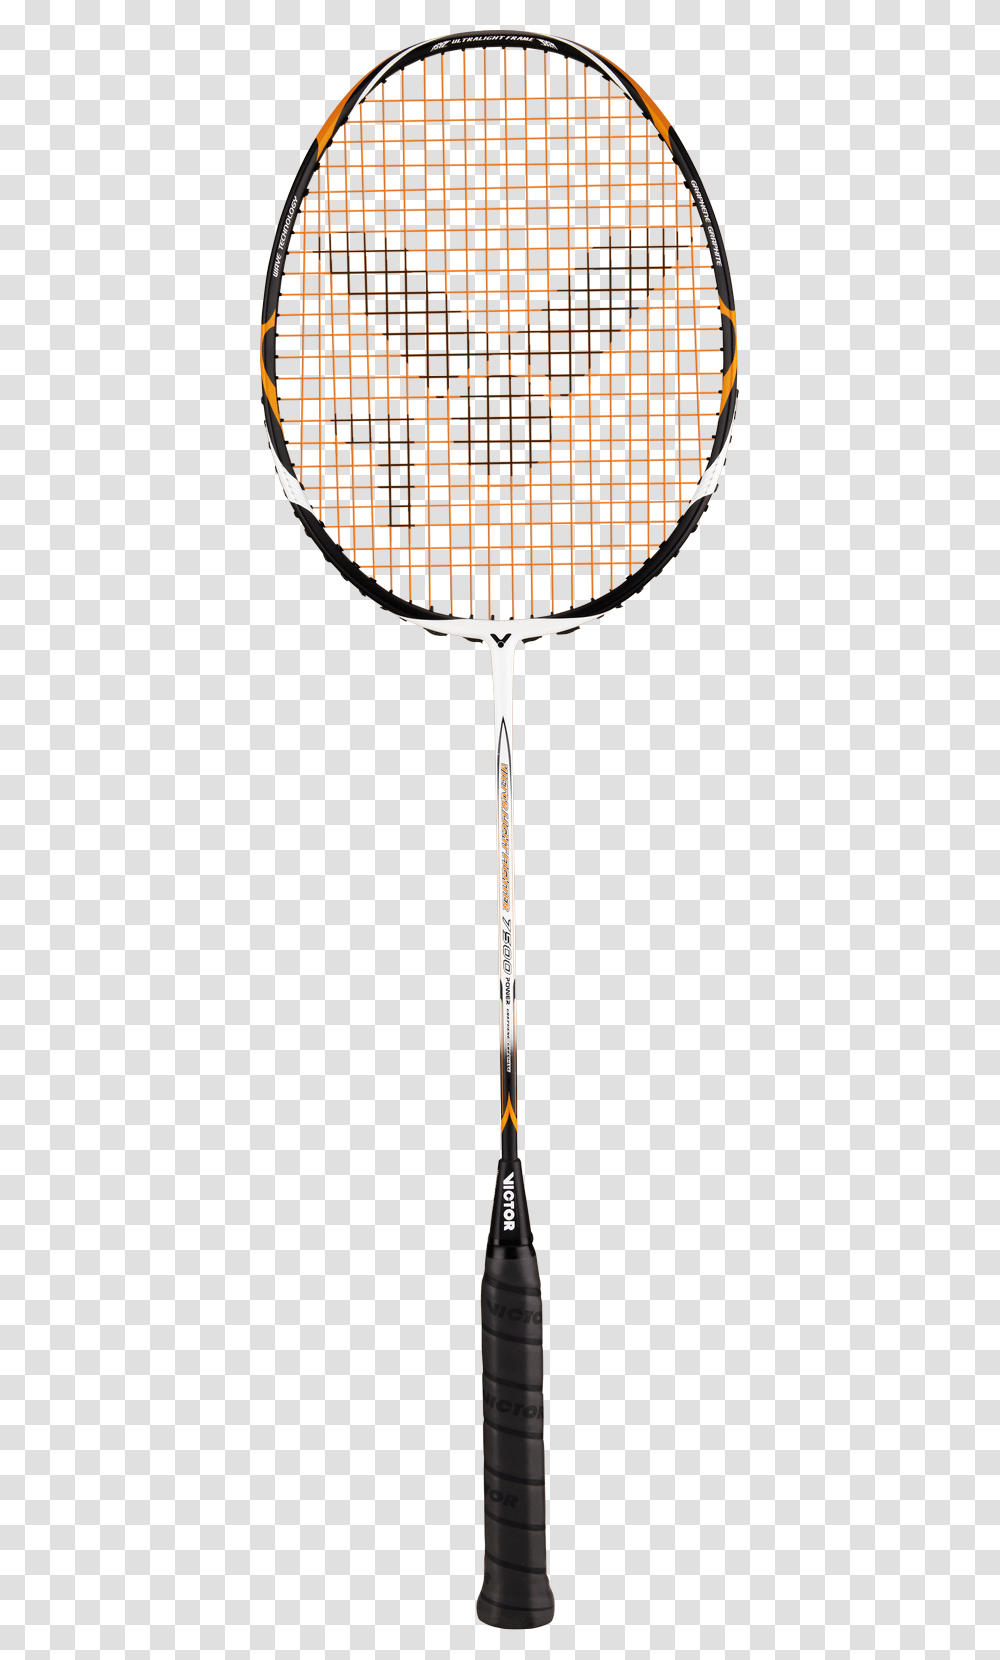 7 5 Light Fighter, Racket, Tennis Racket Transparent Png